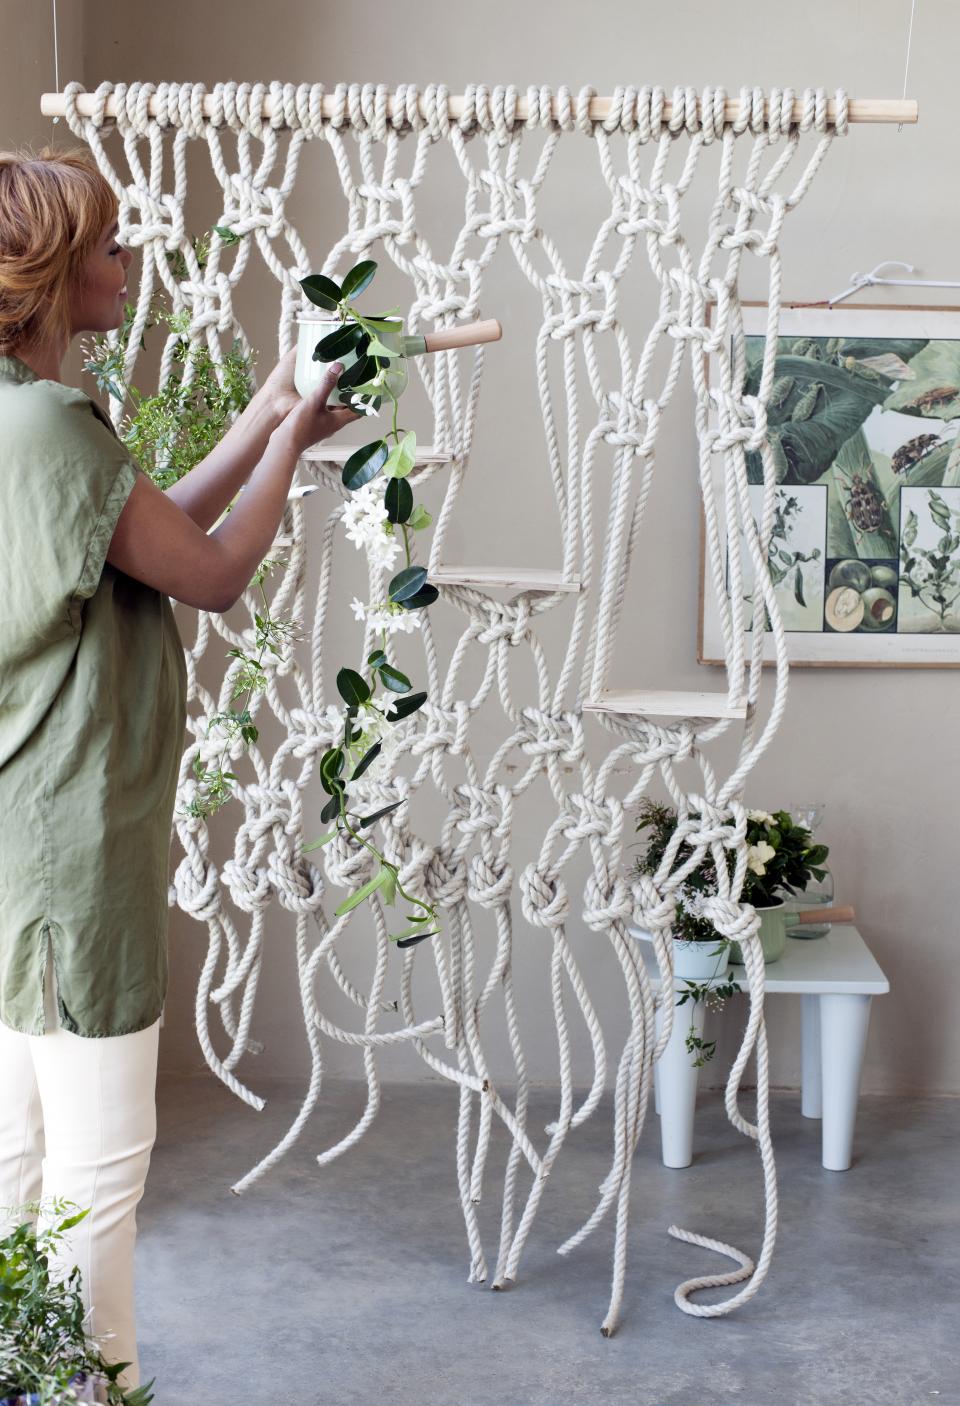 DIY White Fragrant Plants  Thejoyofplants.co.uk